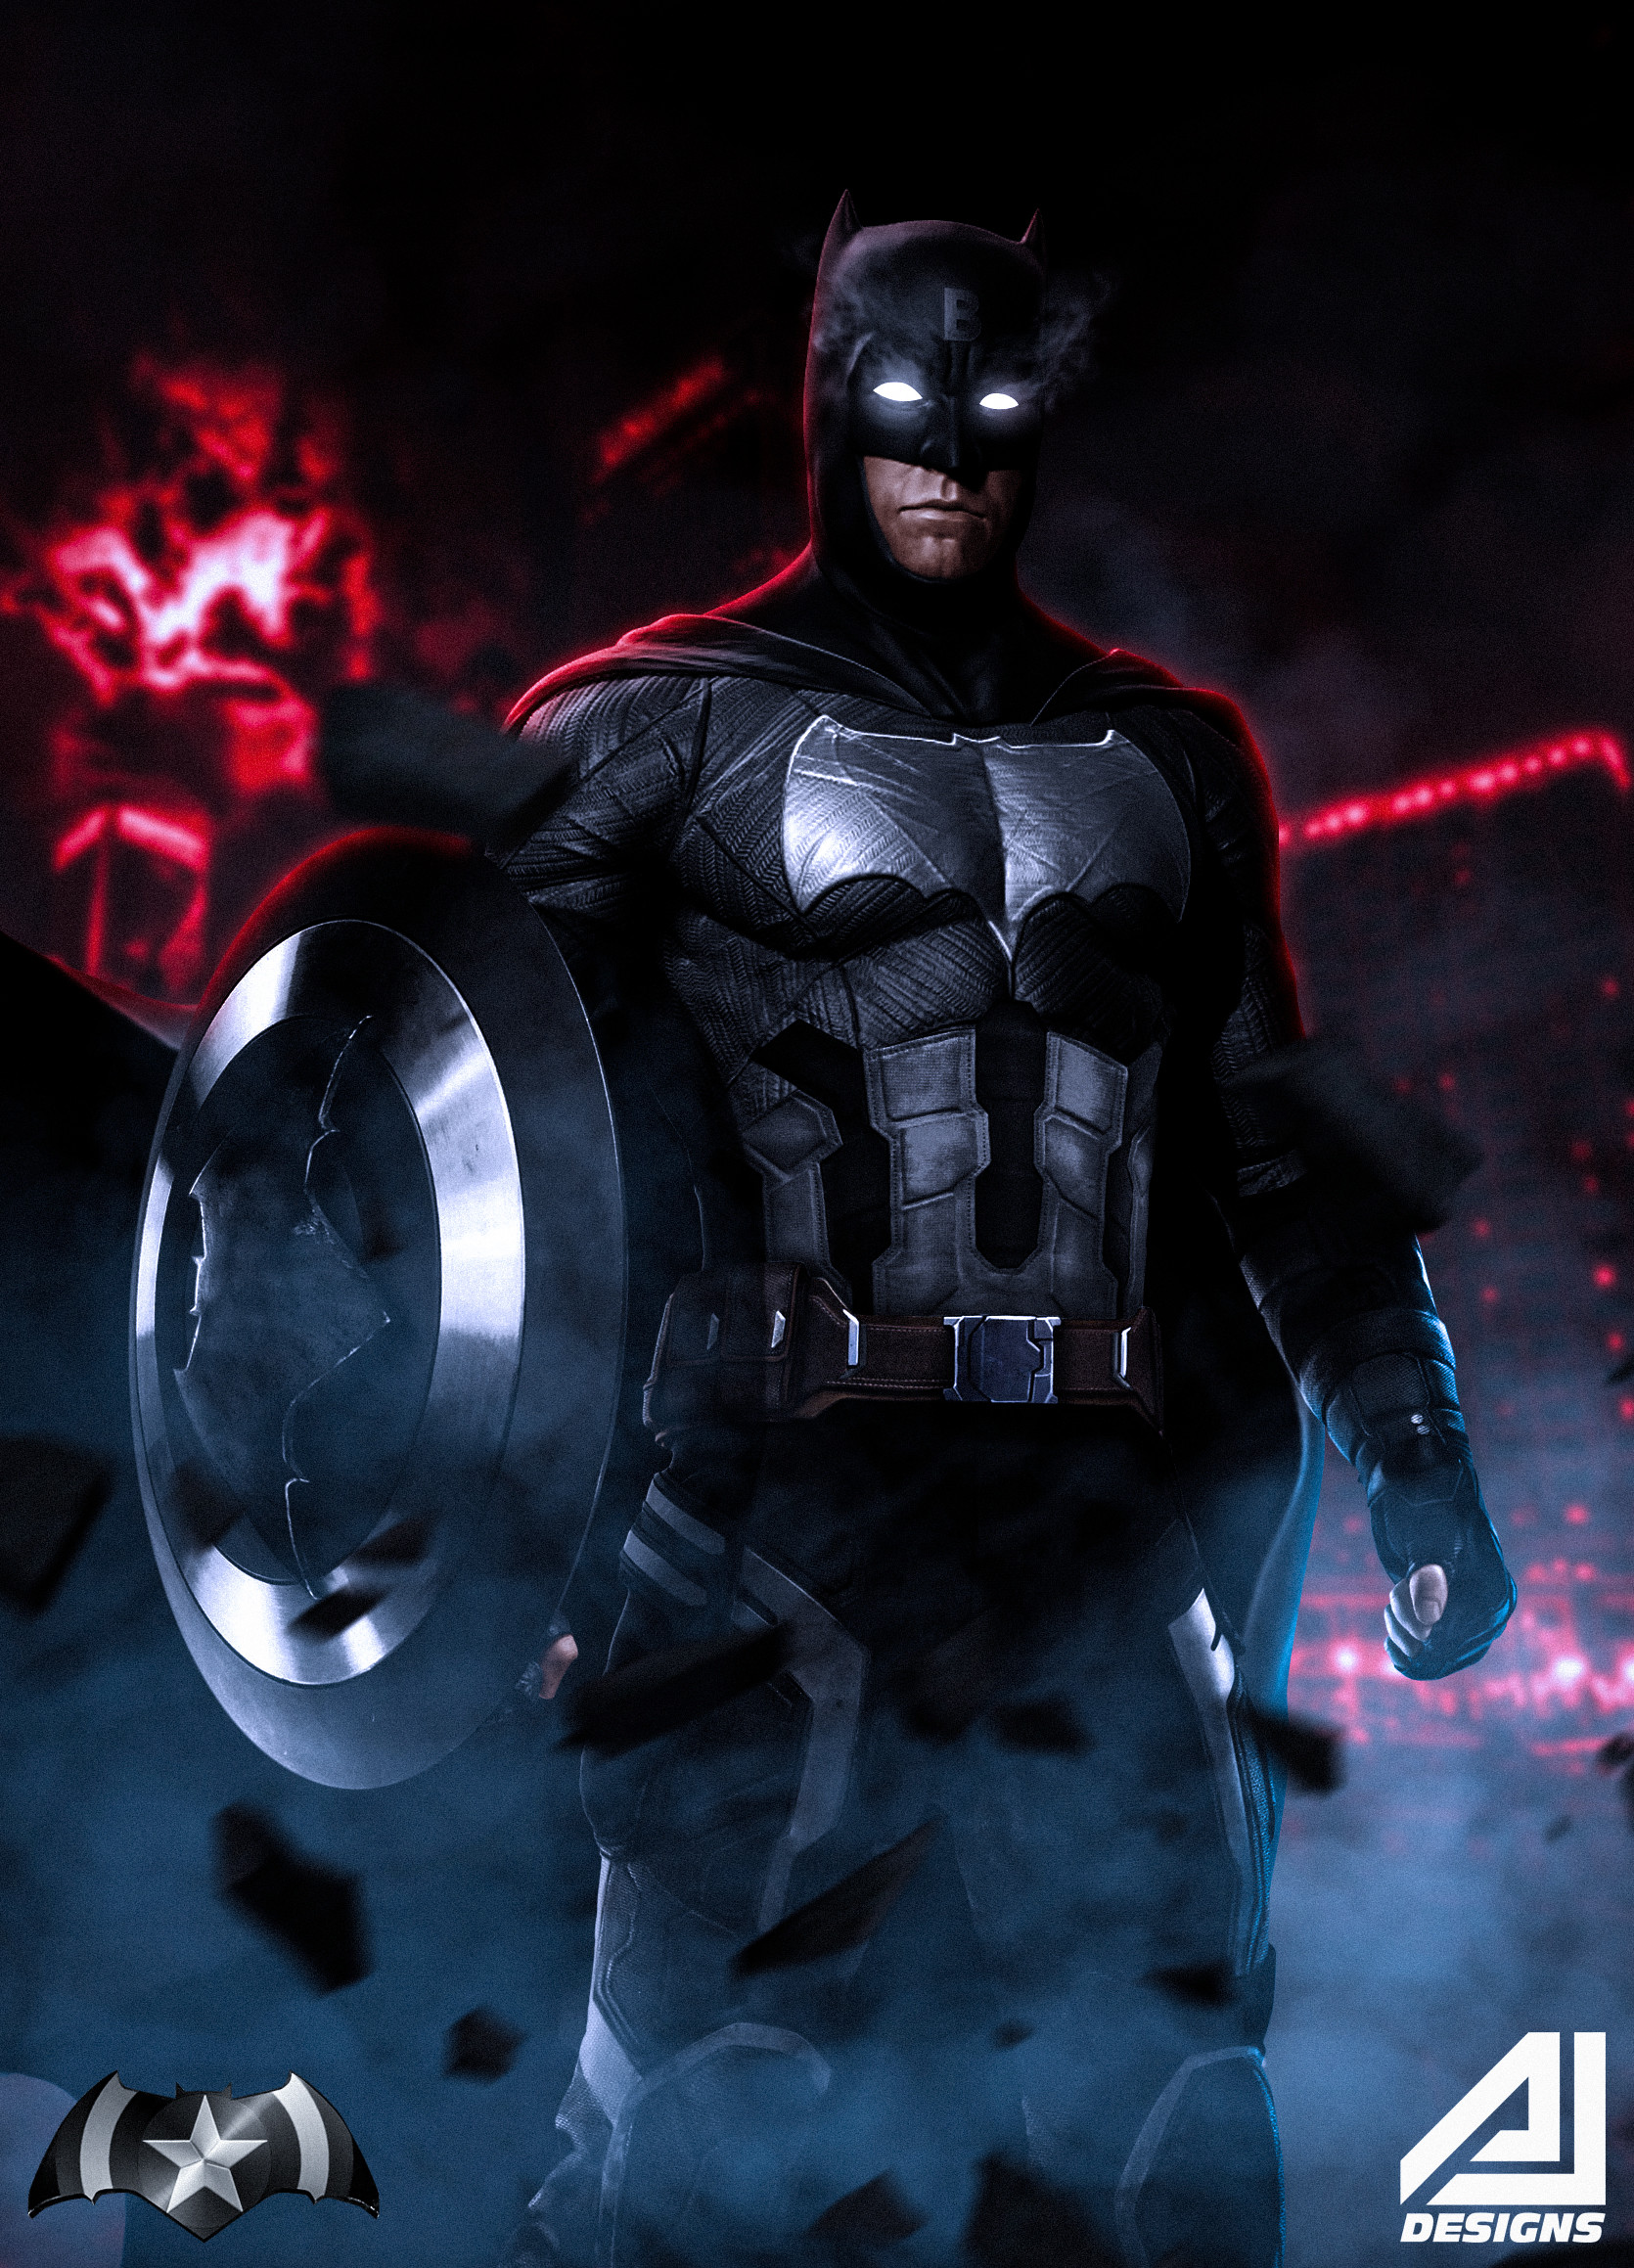 Aj Designs - Batman X Captain America